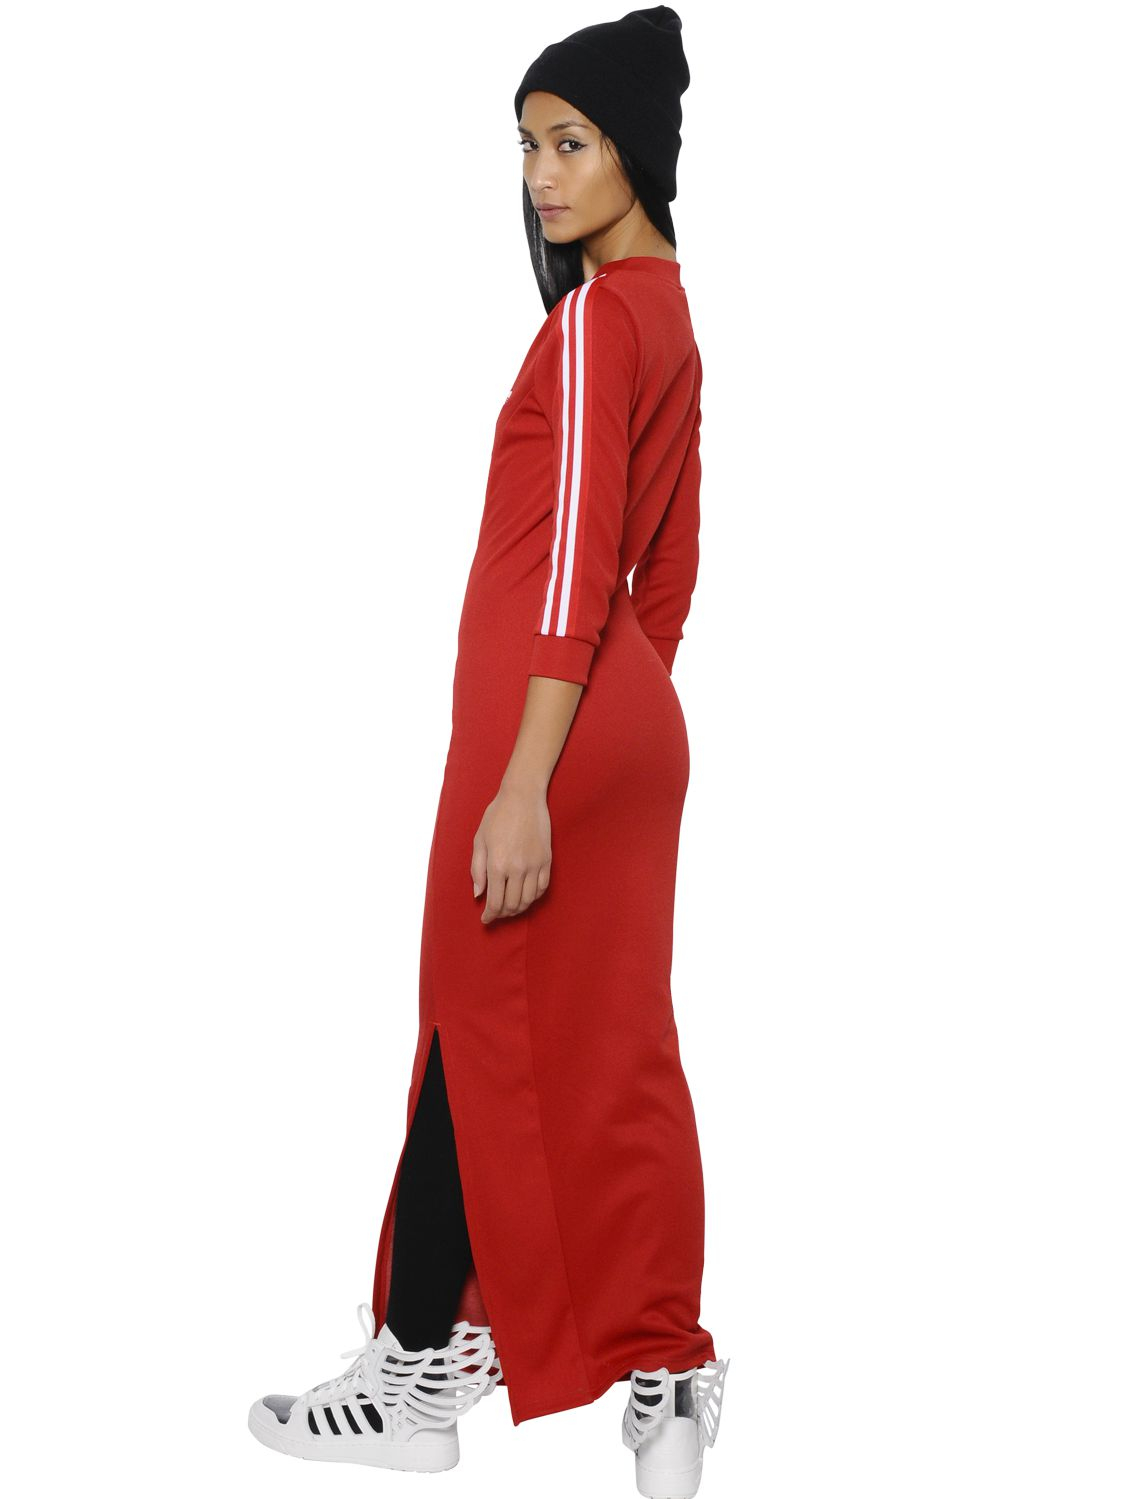 Jeremy Scott for adidas Striped Jersey Dress in Red - Lyst